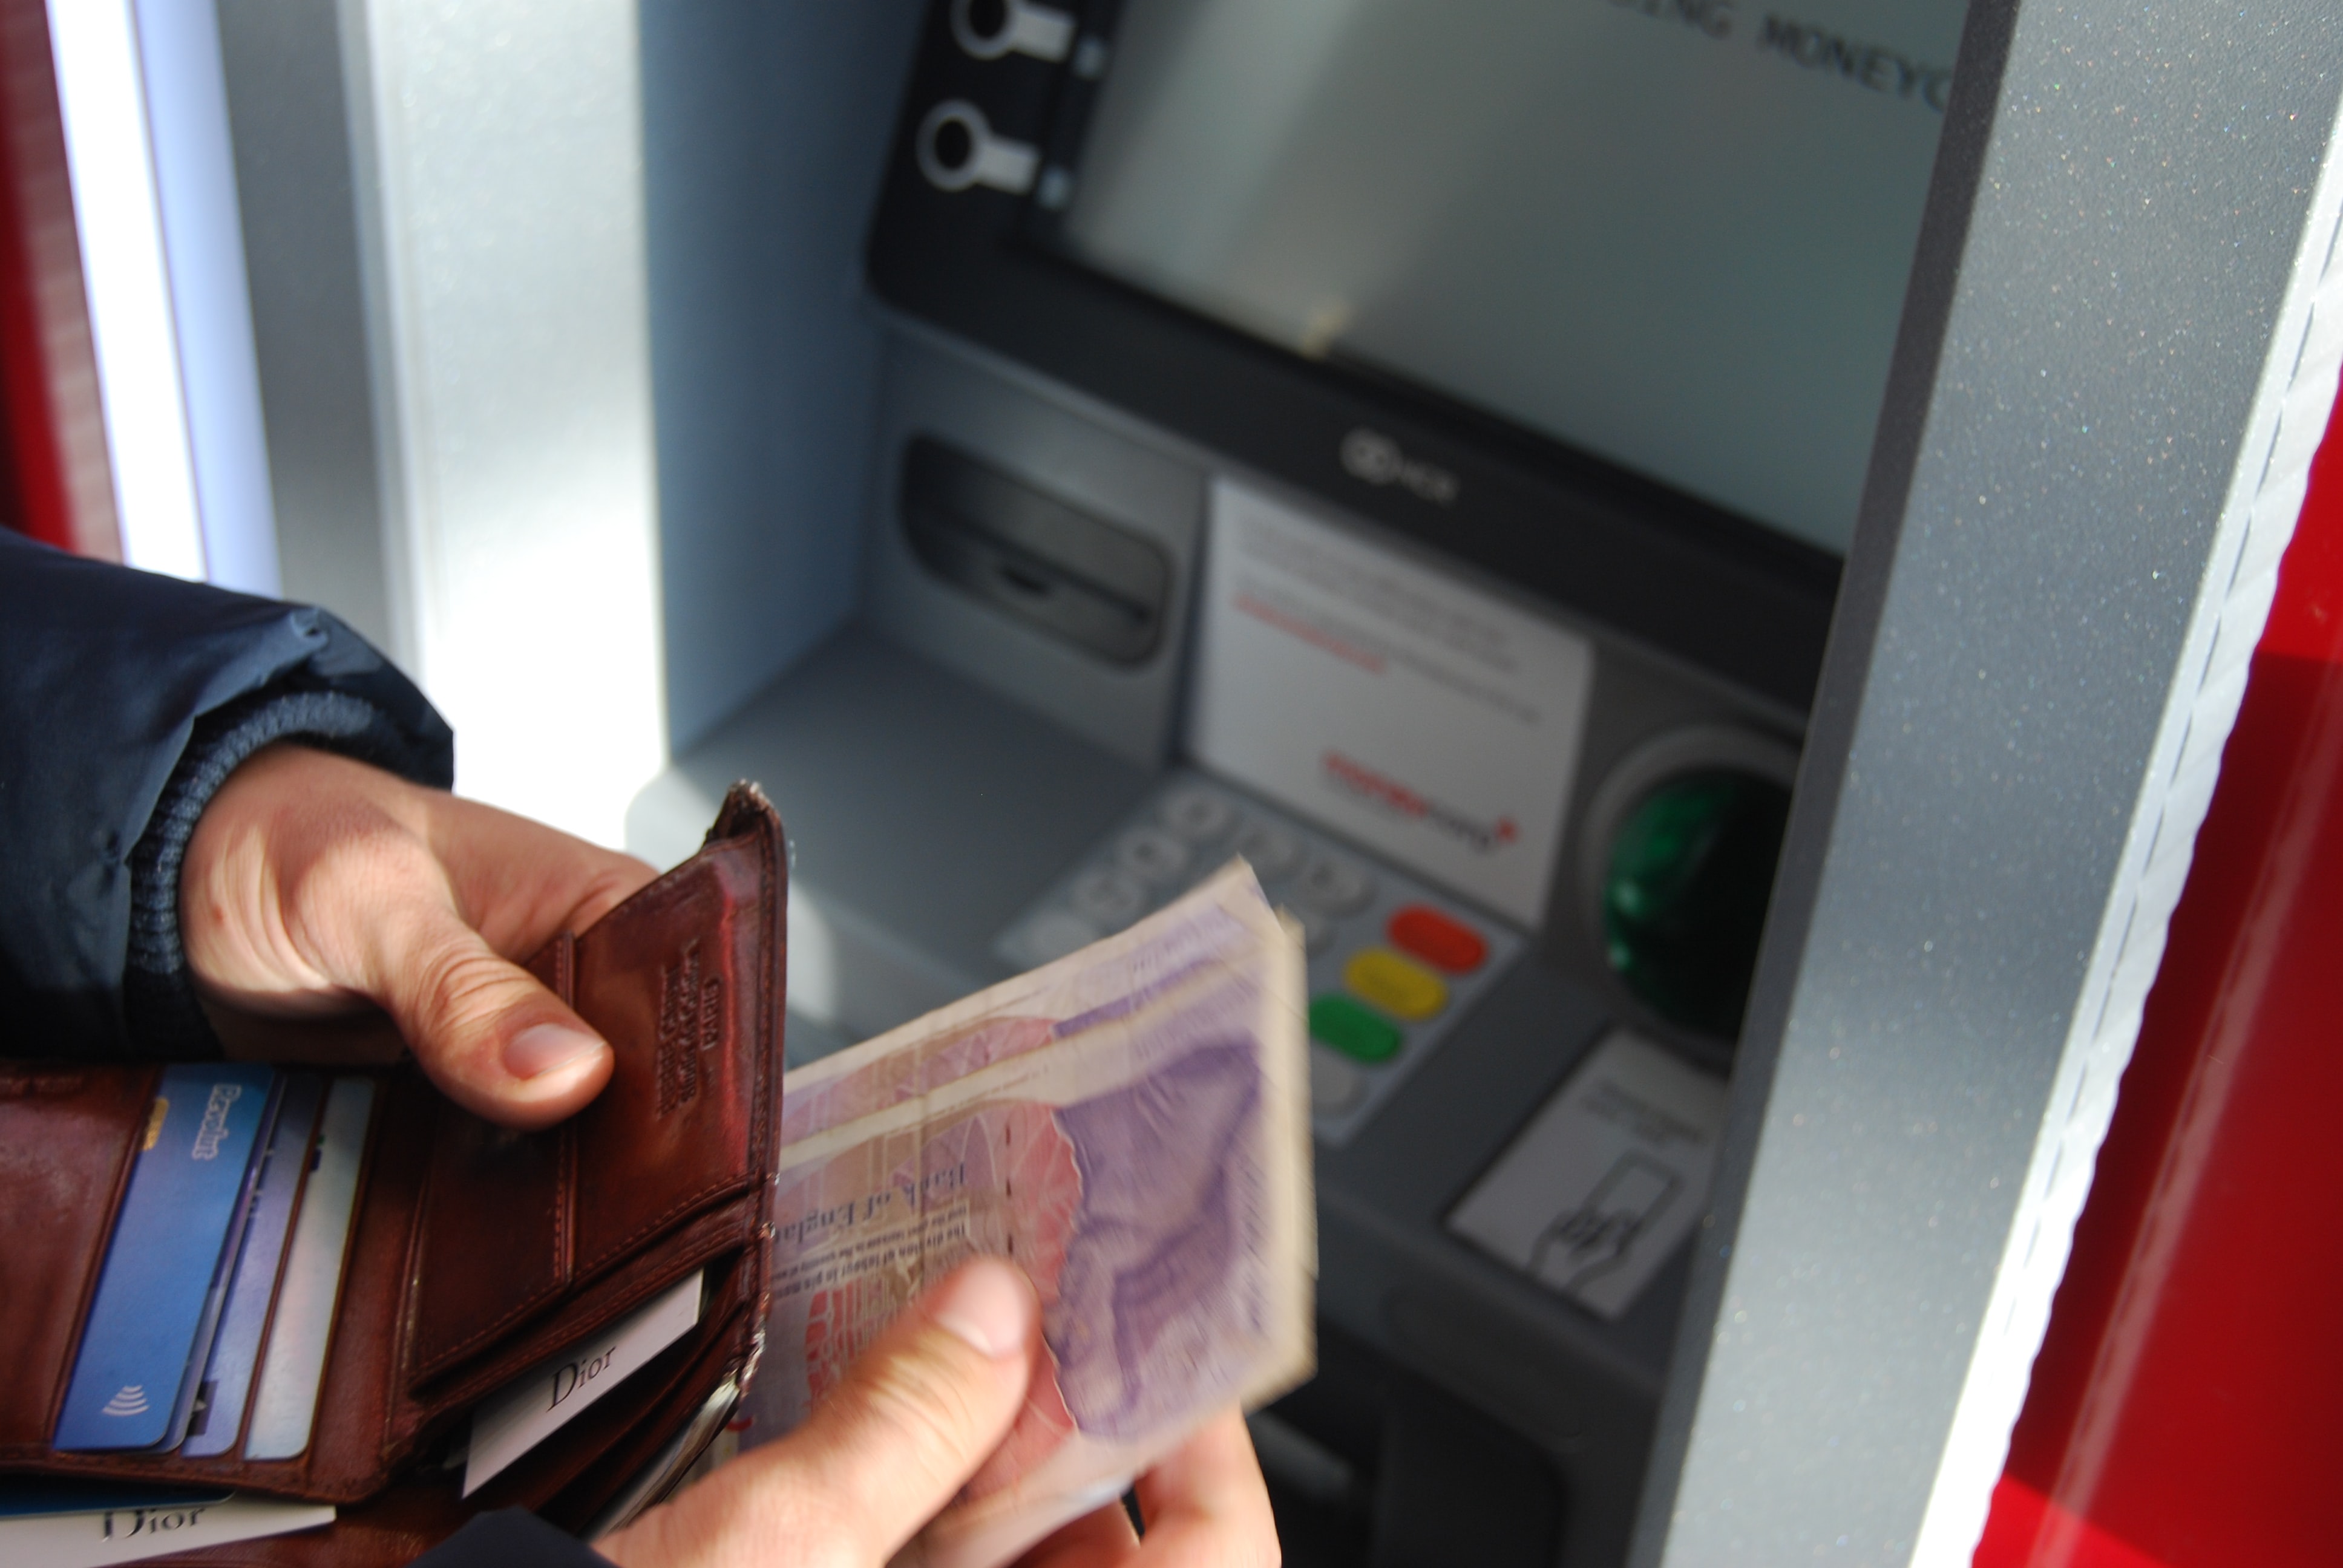 Credit card debt skyrockets in UK